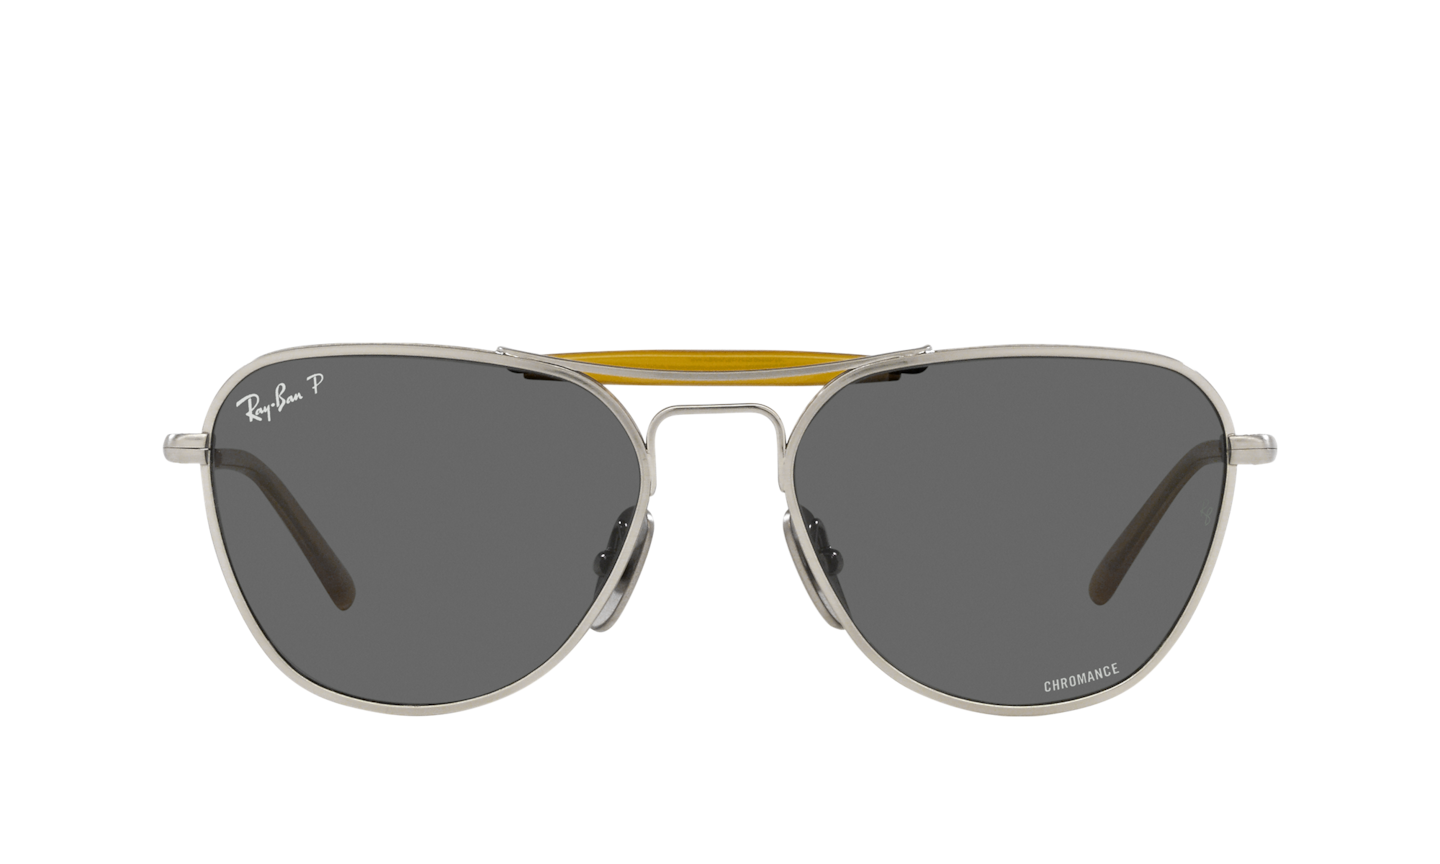 Ray-Ban Silver Sunglasses | Glasses.com® | Free Shipping